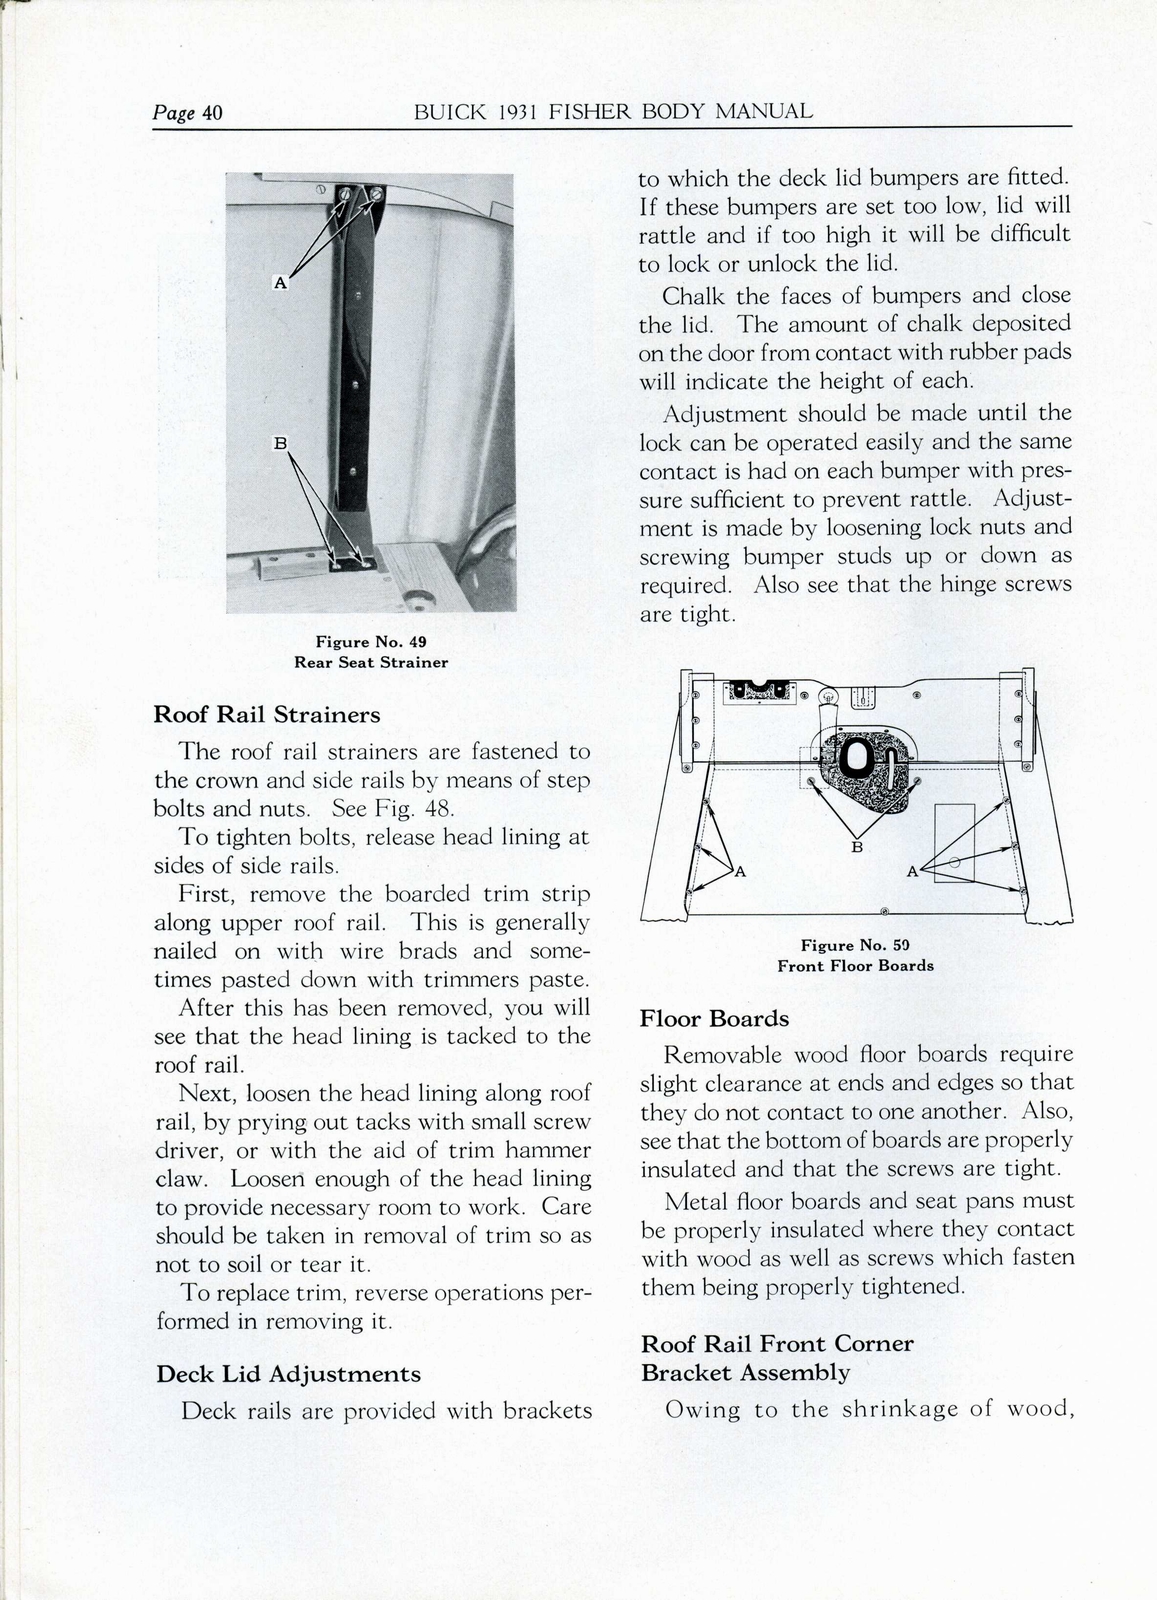 n_1931 Buick Fisher Body Manual-40.jpg